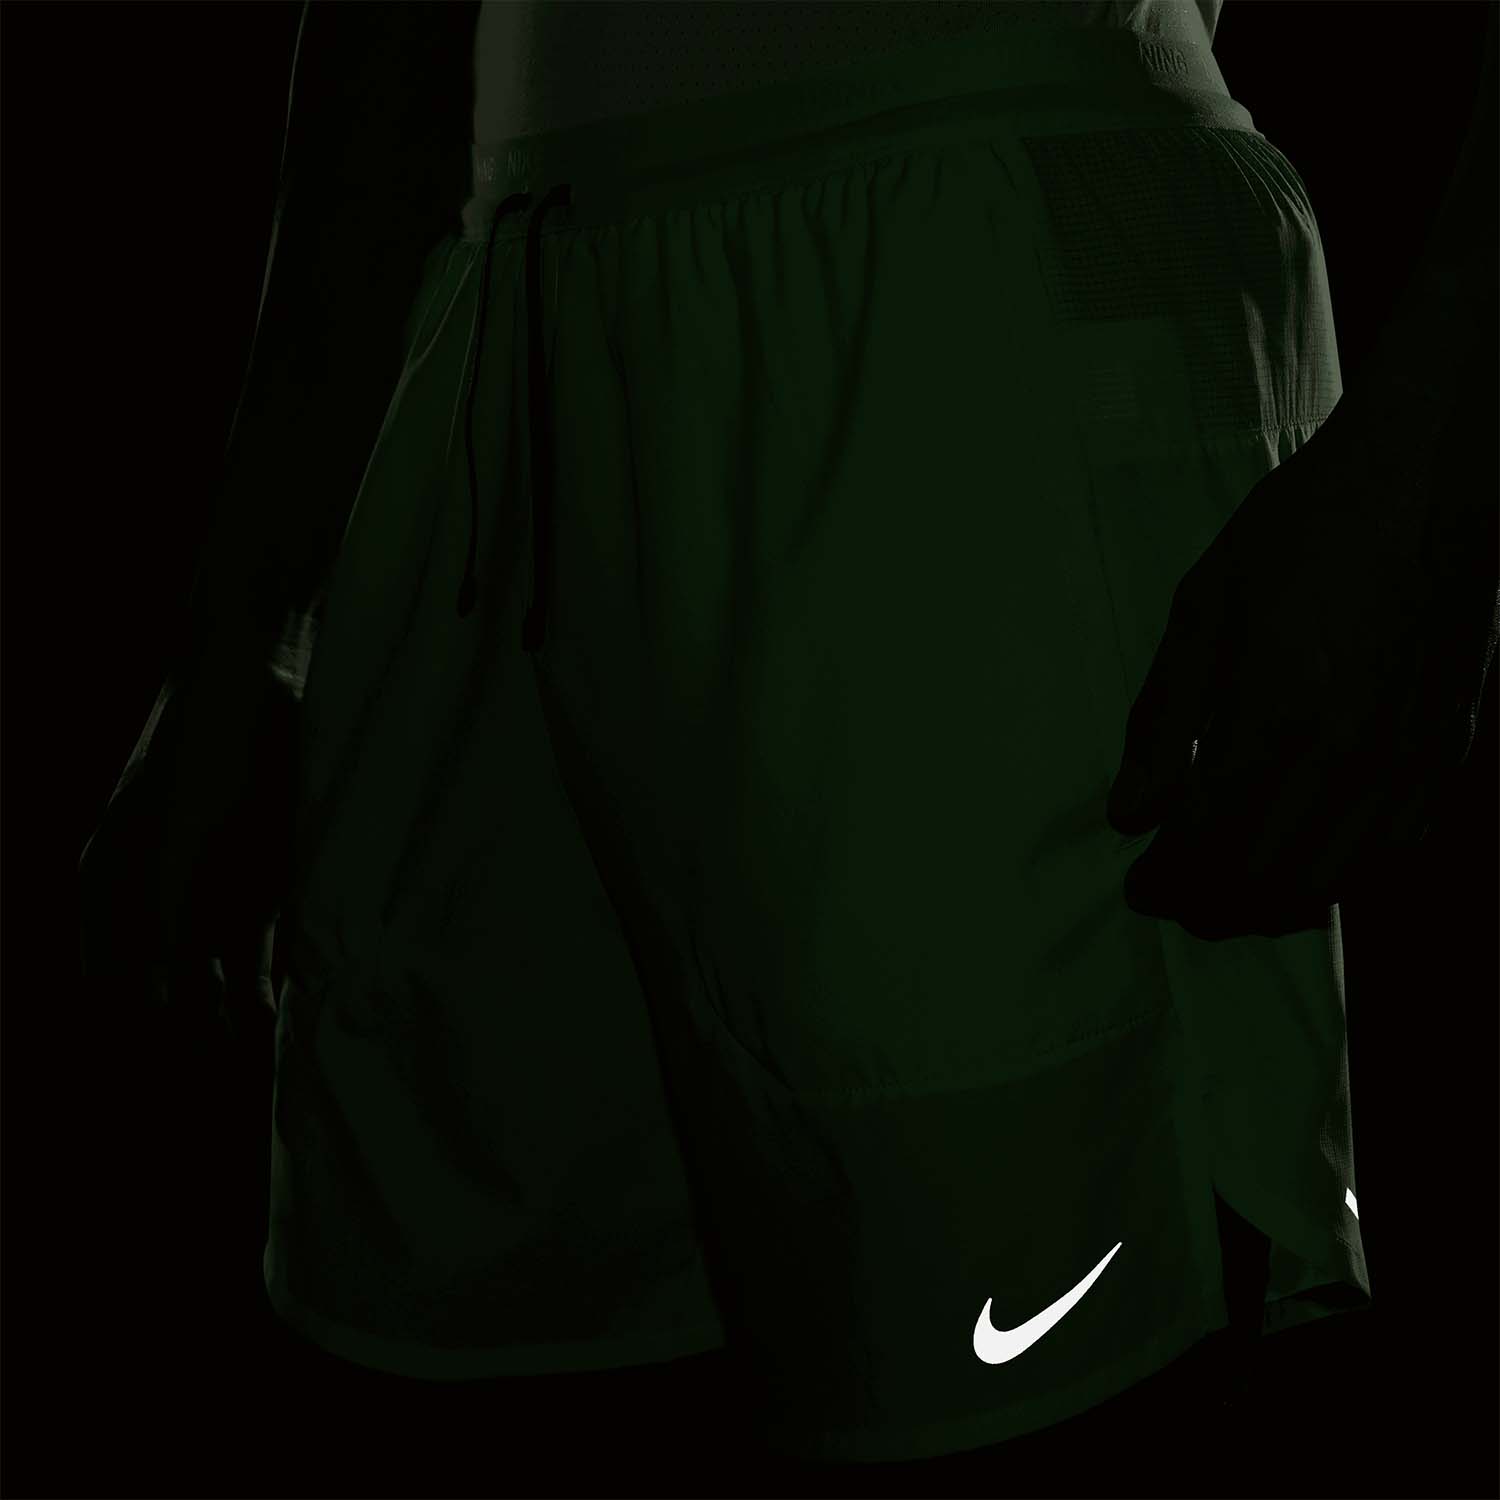 Nike Dri-FIT Stride 2 in 1 7in Shorts - Vapor Green/Reflective Silver